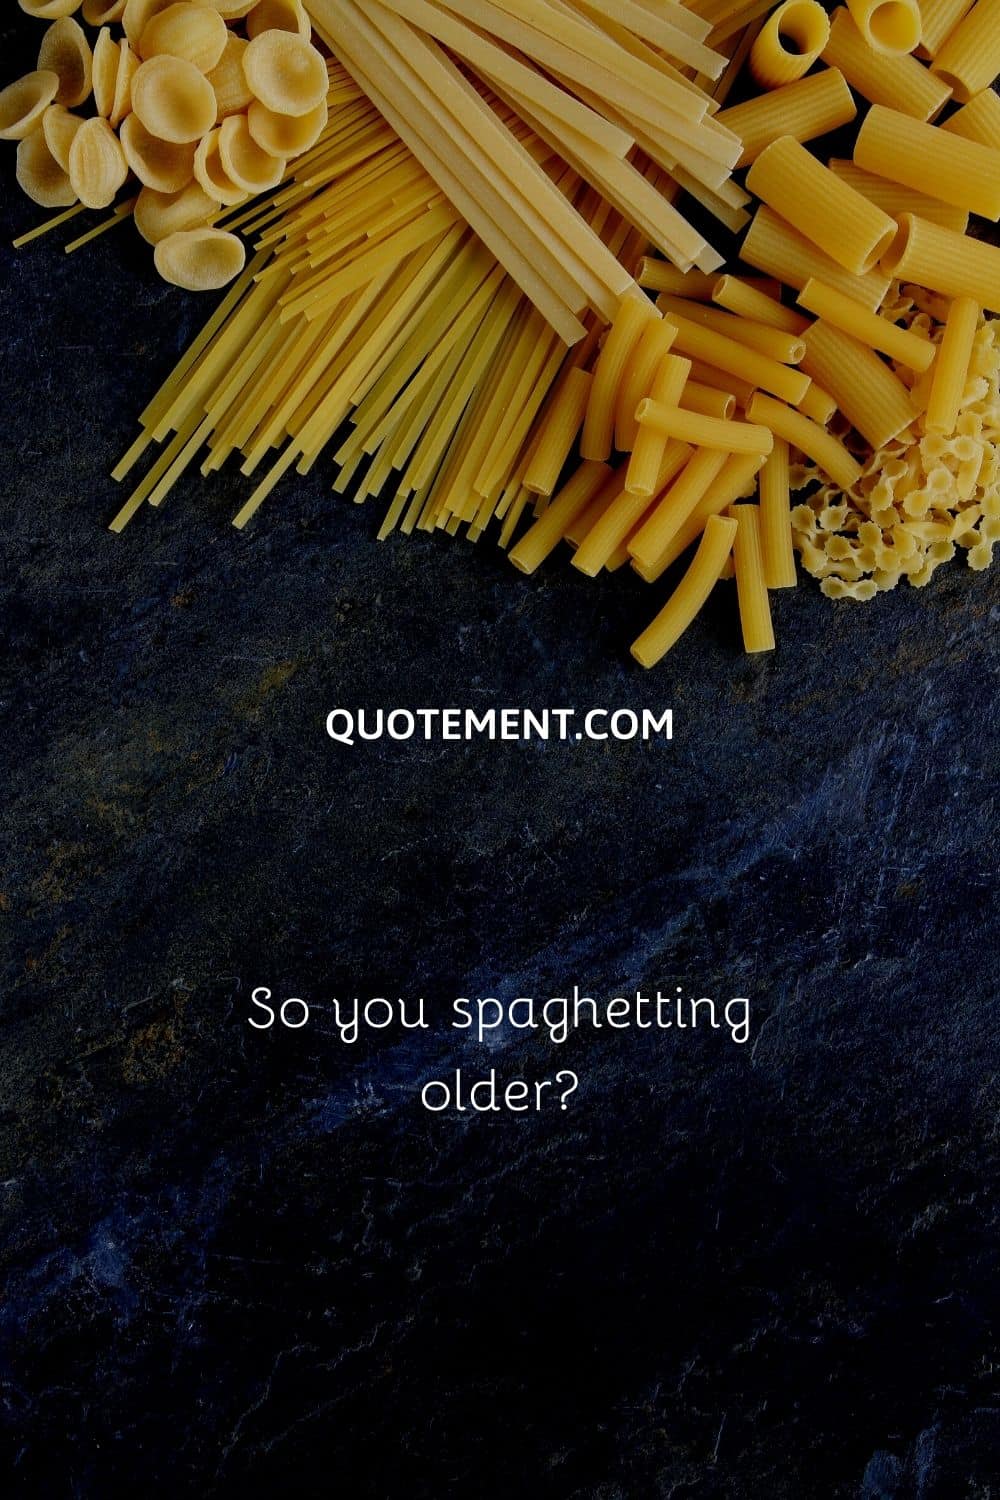 So you spaghetting older